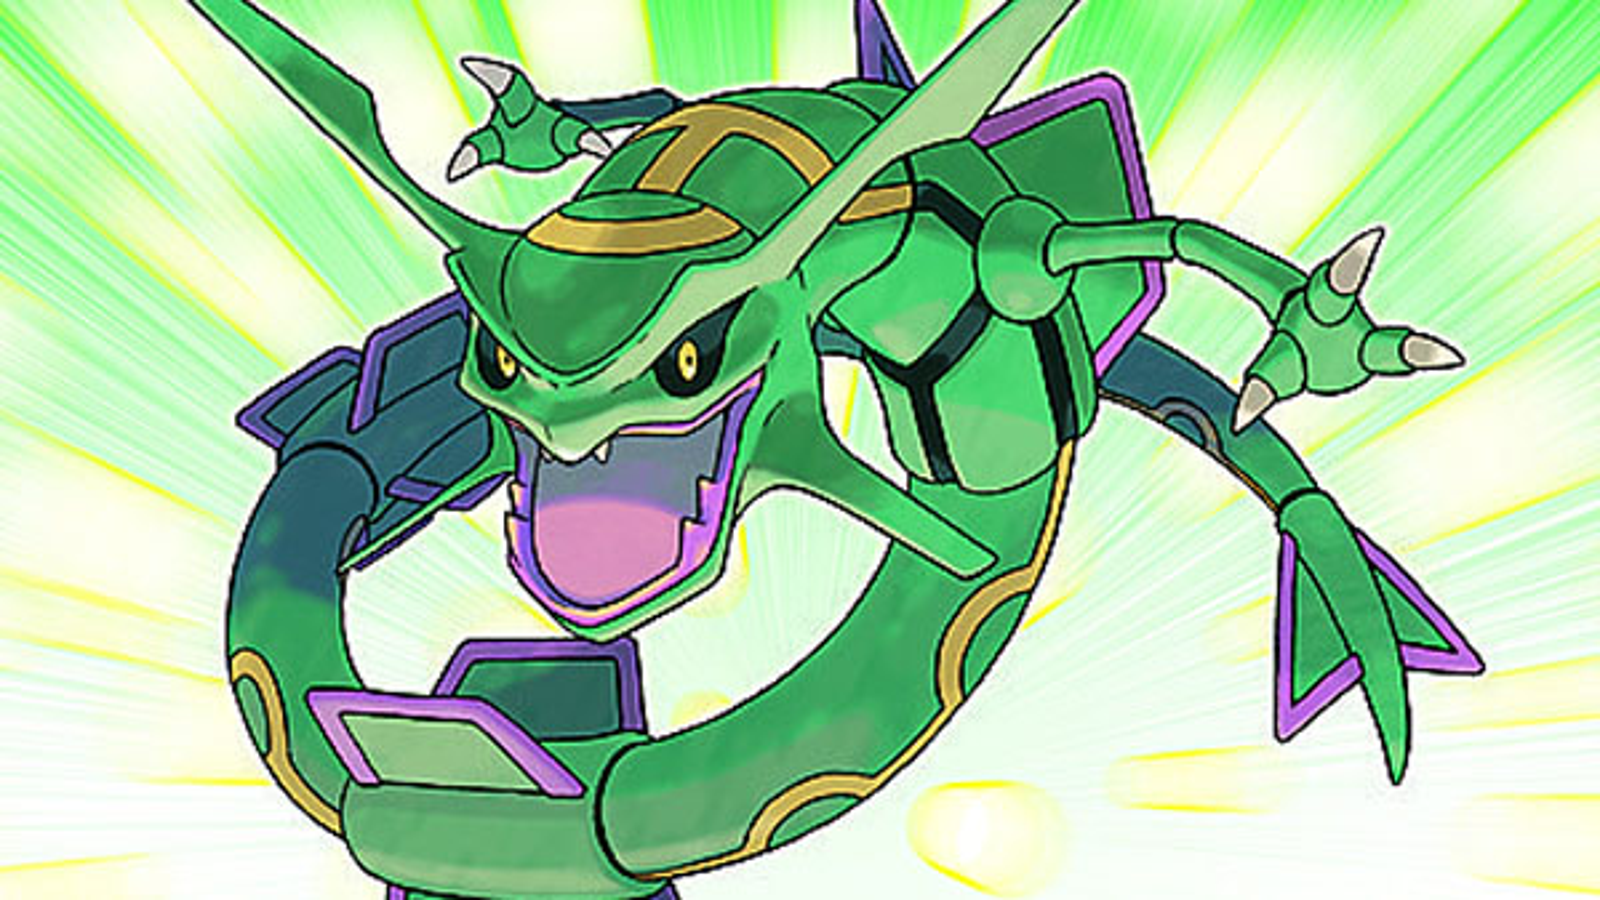 Nintendo trademarks 'Delta Emerald' in Japan. Another Pokemon